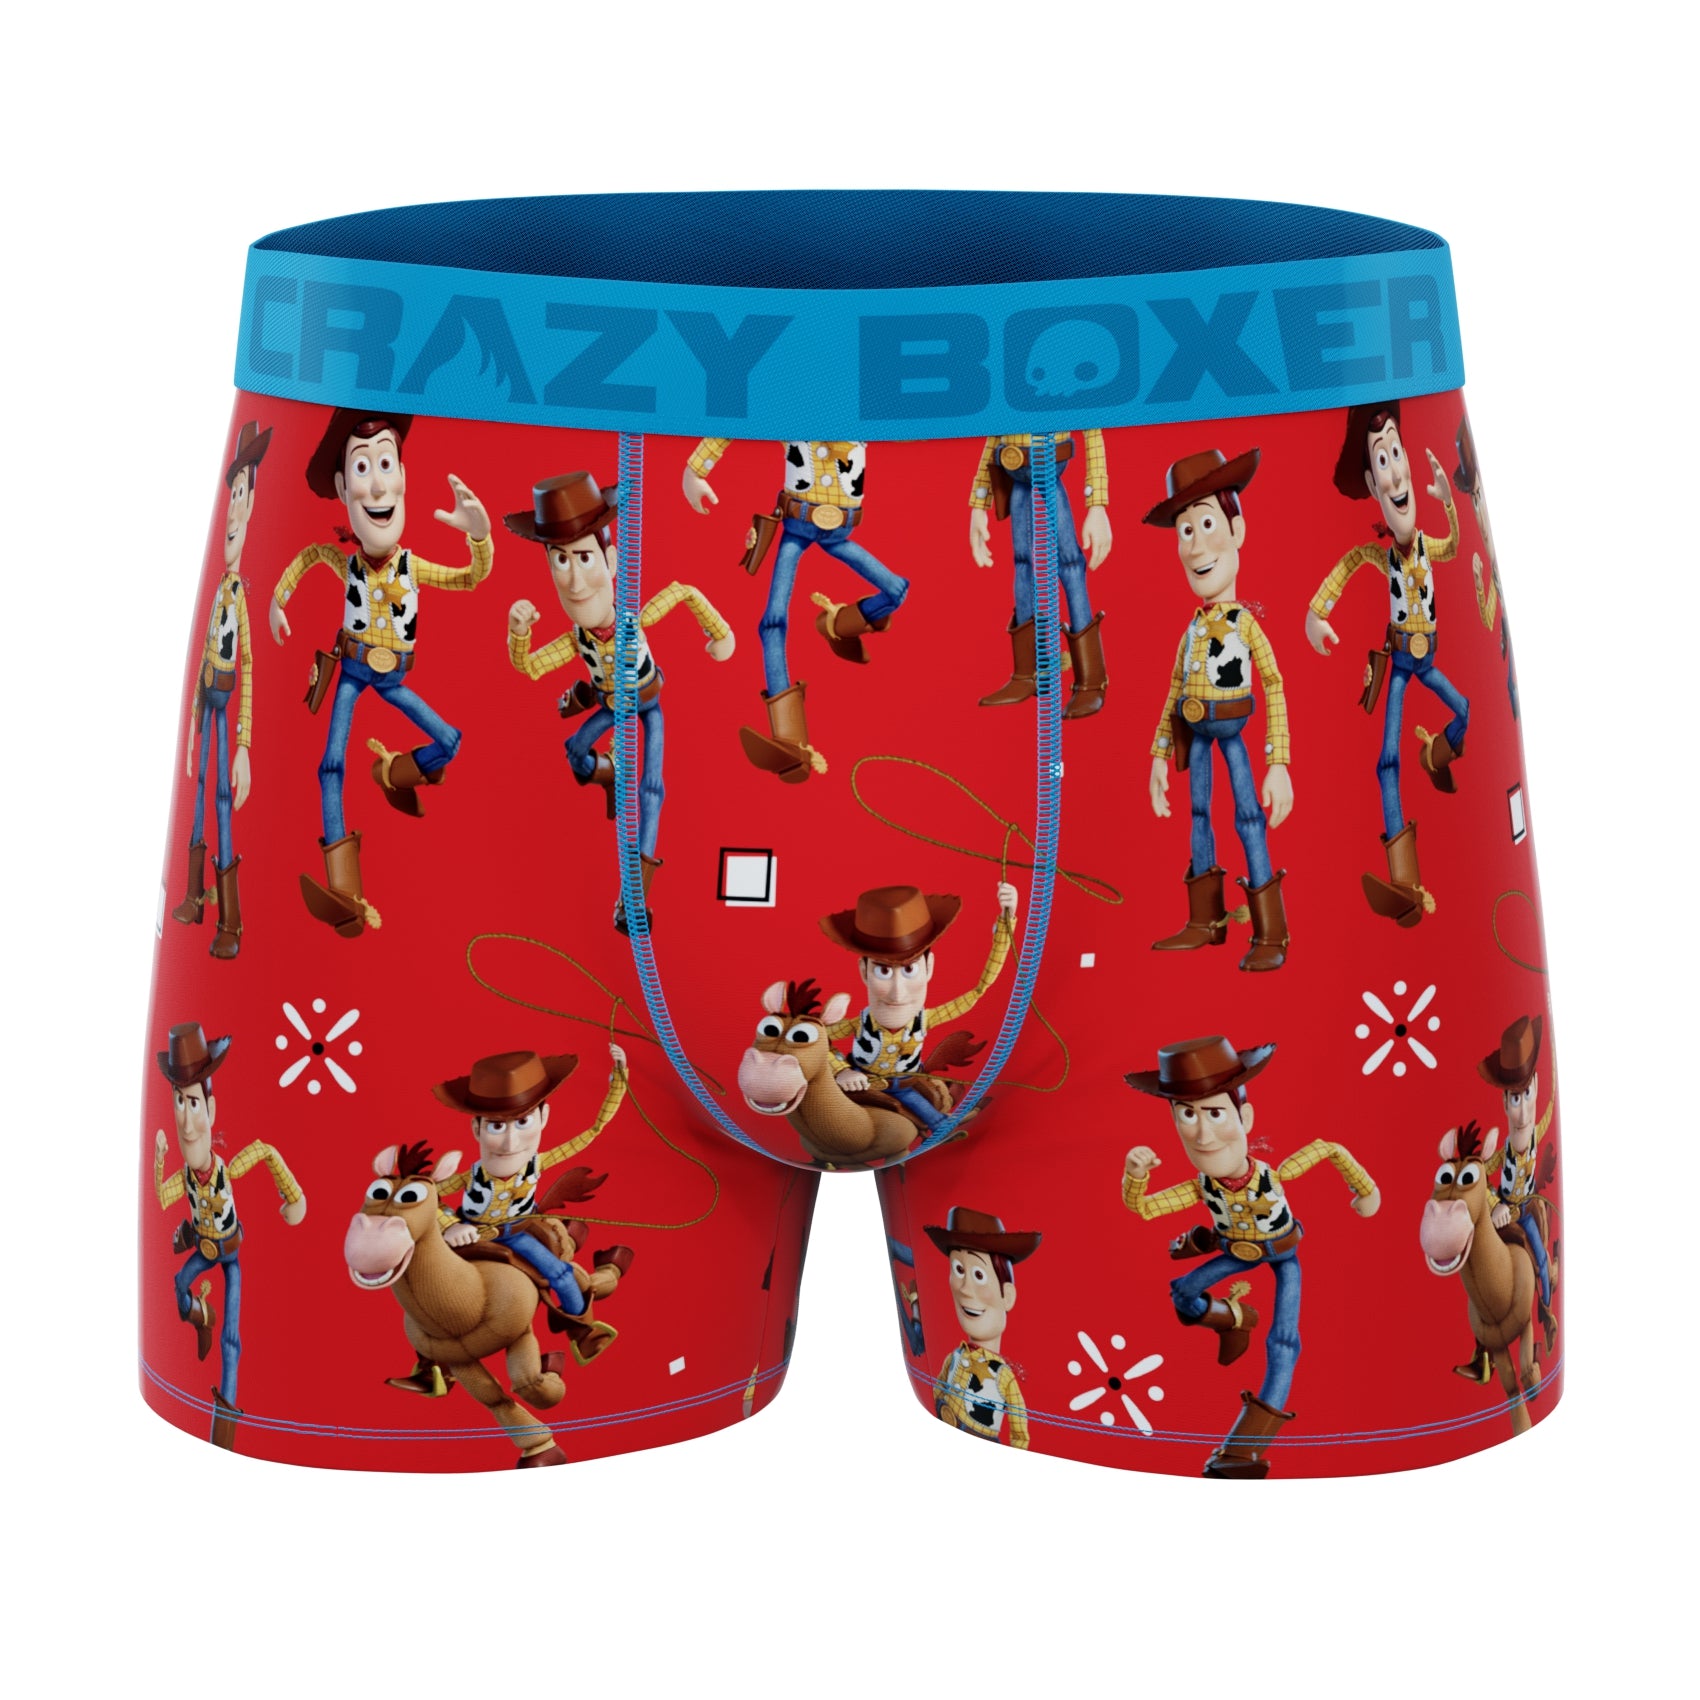 CRAZYBOXER Men's Underwear Comfortable Soft Boxer Brief Breathable at   Men's Clothing store